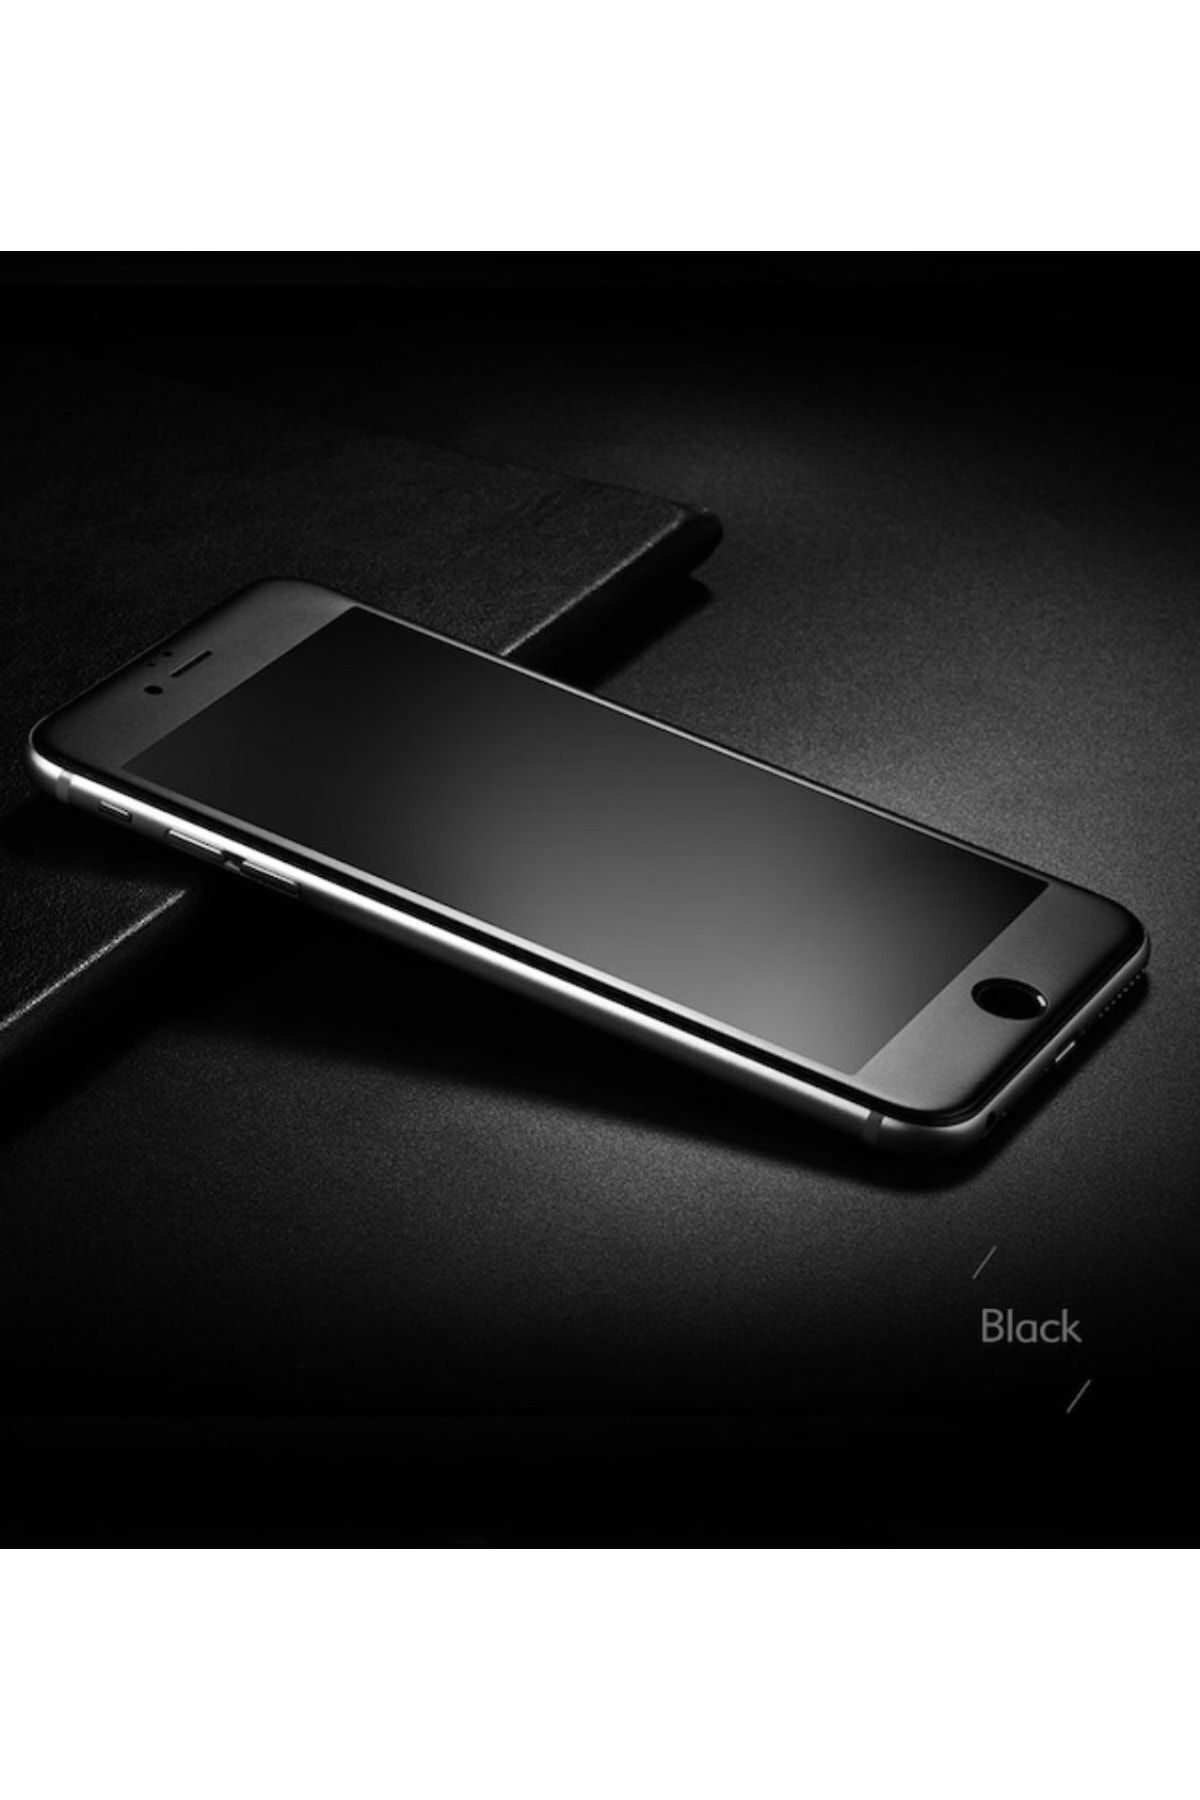 TEKNOPARKTA Iphone Se 2020 Mat Seramik Nano Tam Kaplayan Full Ekran Koruyucu Siyah